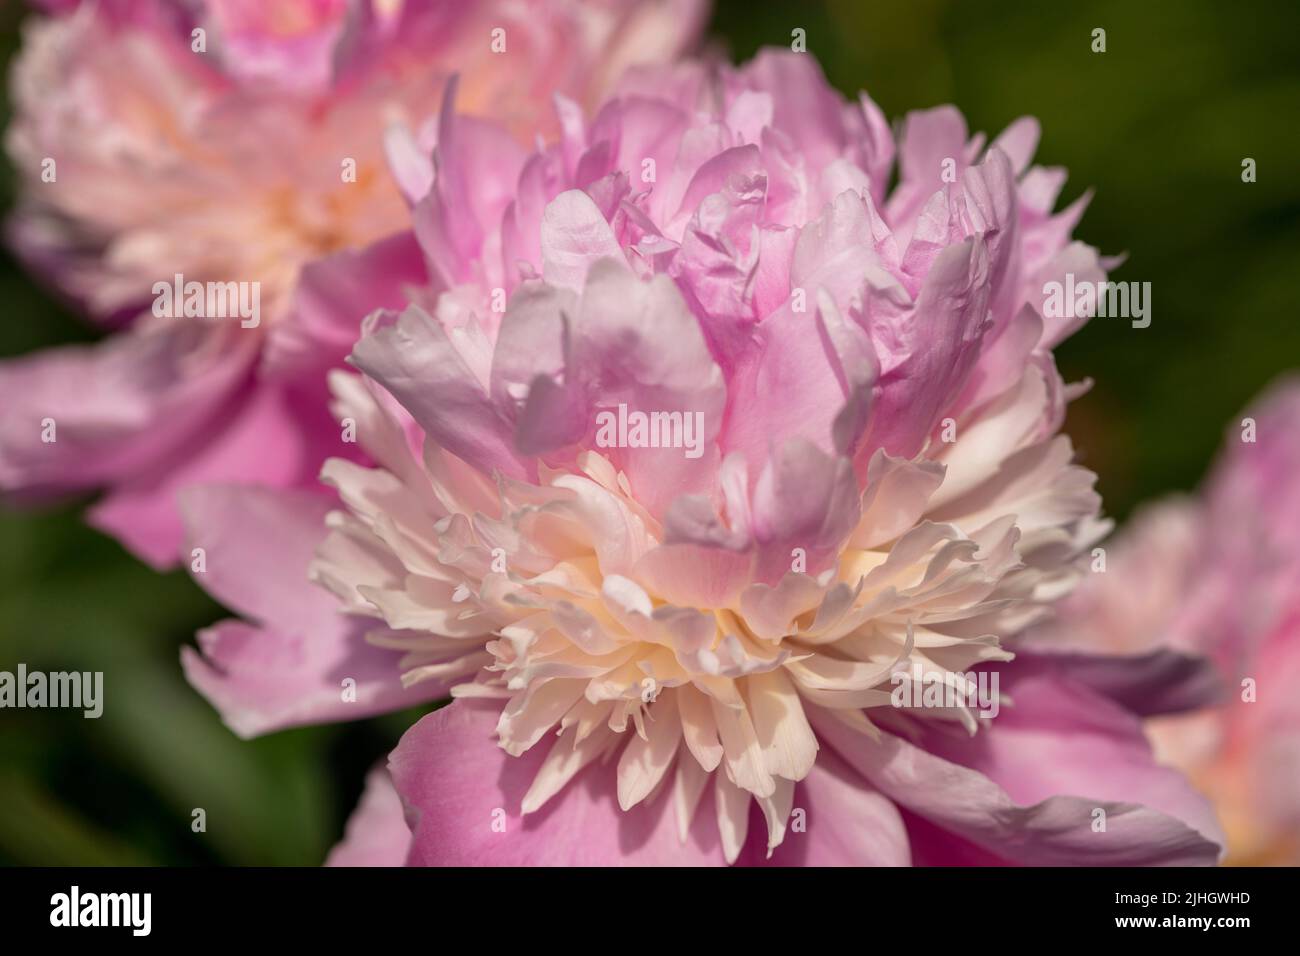 Attractively ruffled Paeonia Lactiflora 'Monsieur Jules Elie’, natural flower portrait Stock Photo